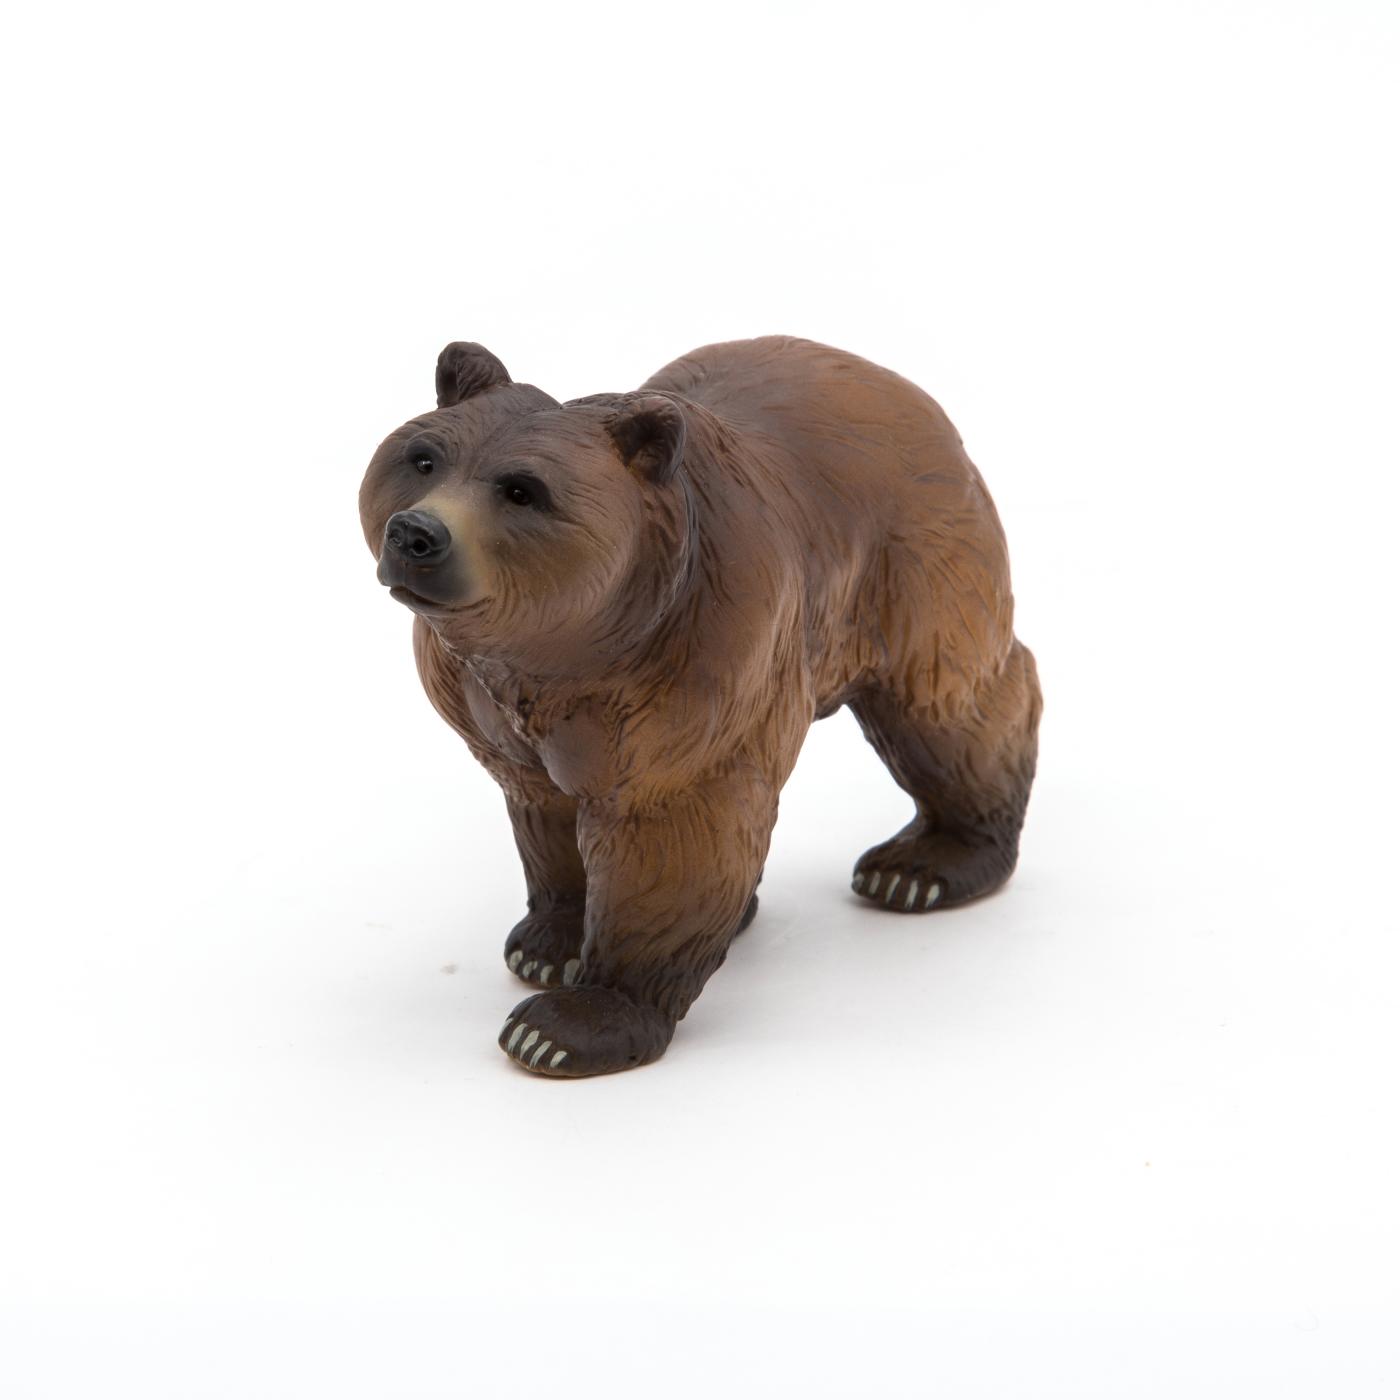 Papo 50032 brown bear - animal figures at spielzeug-guenstig.de